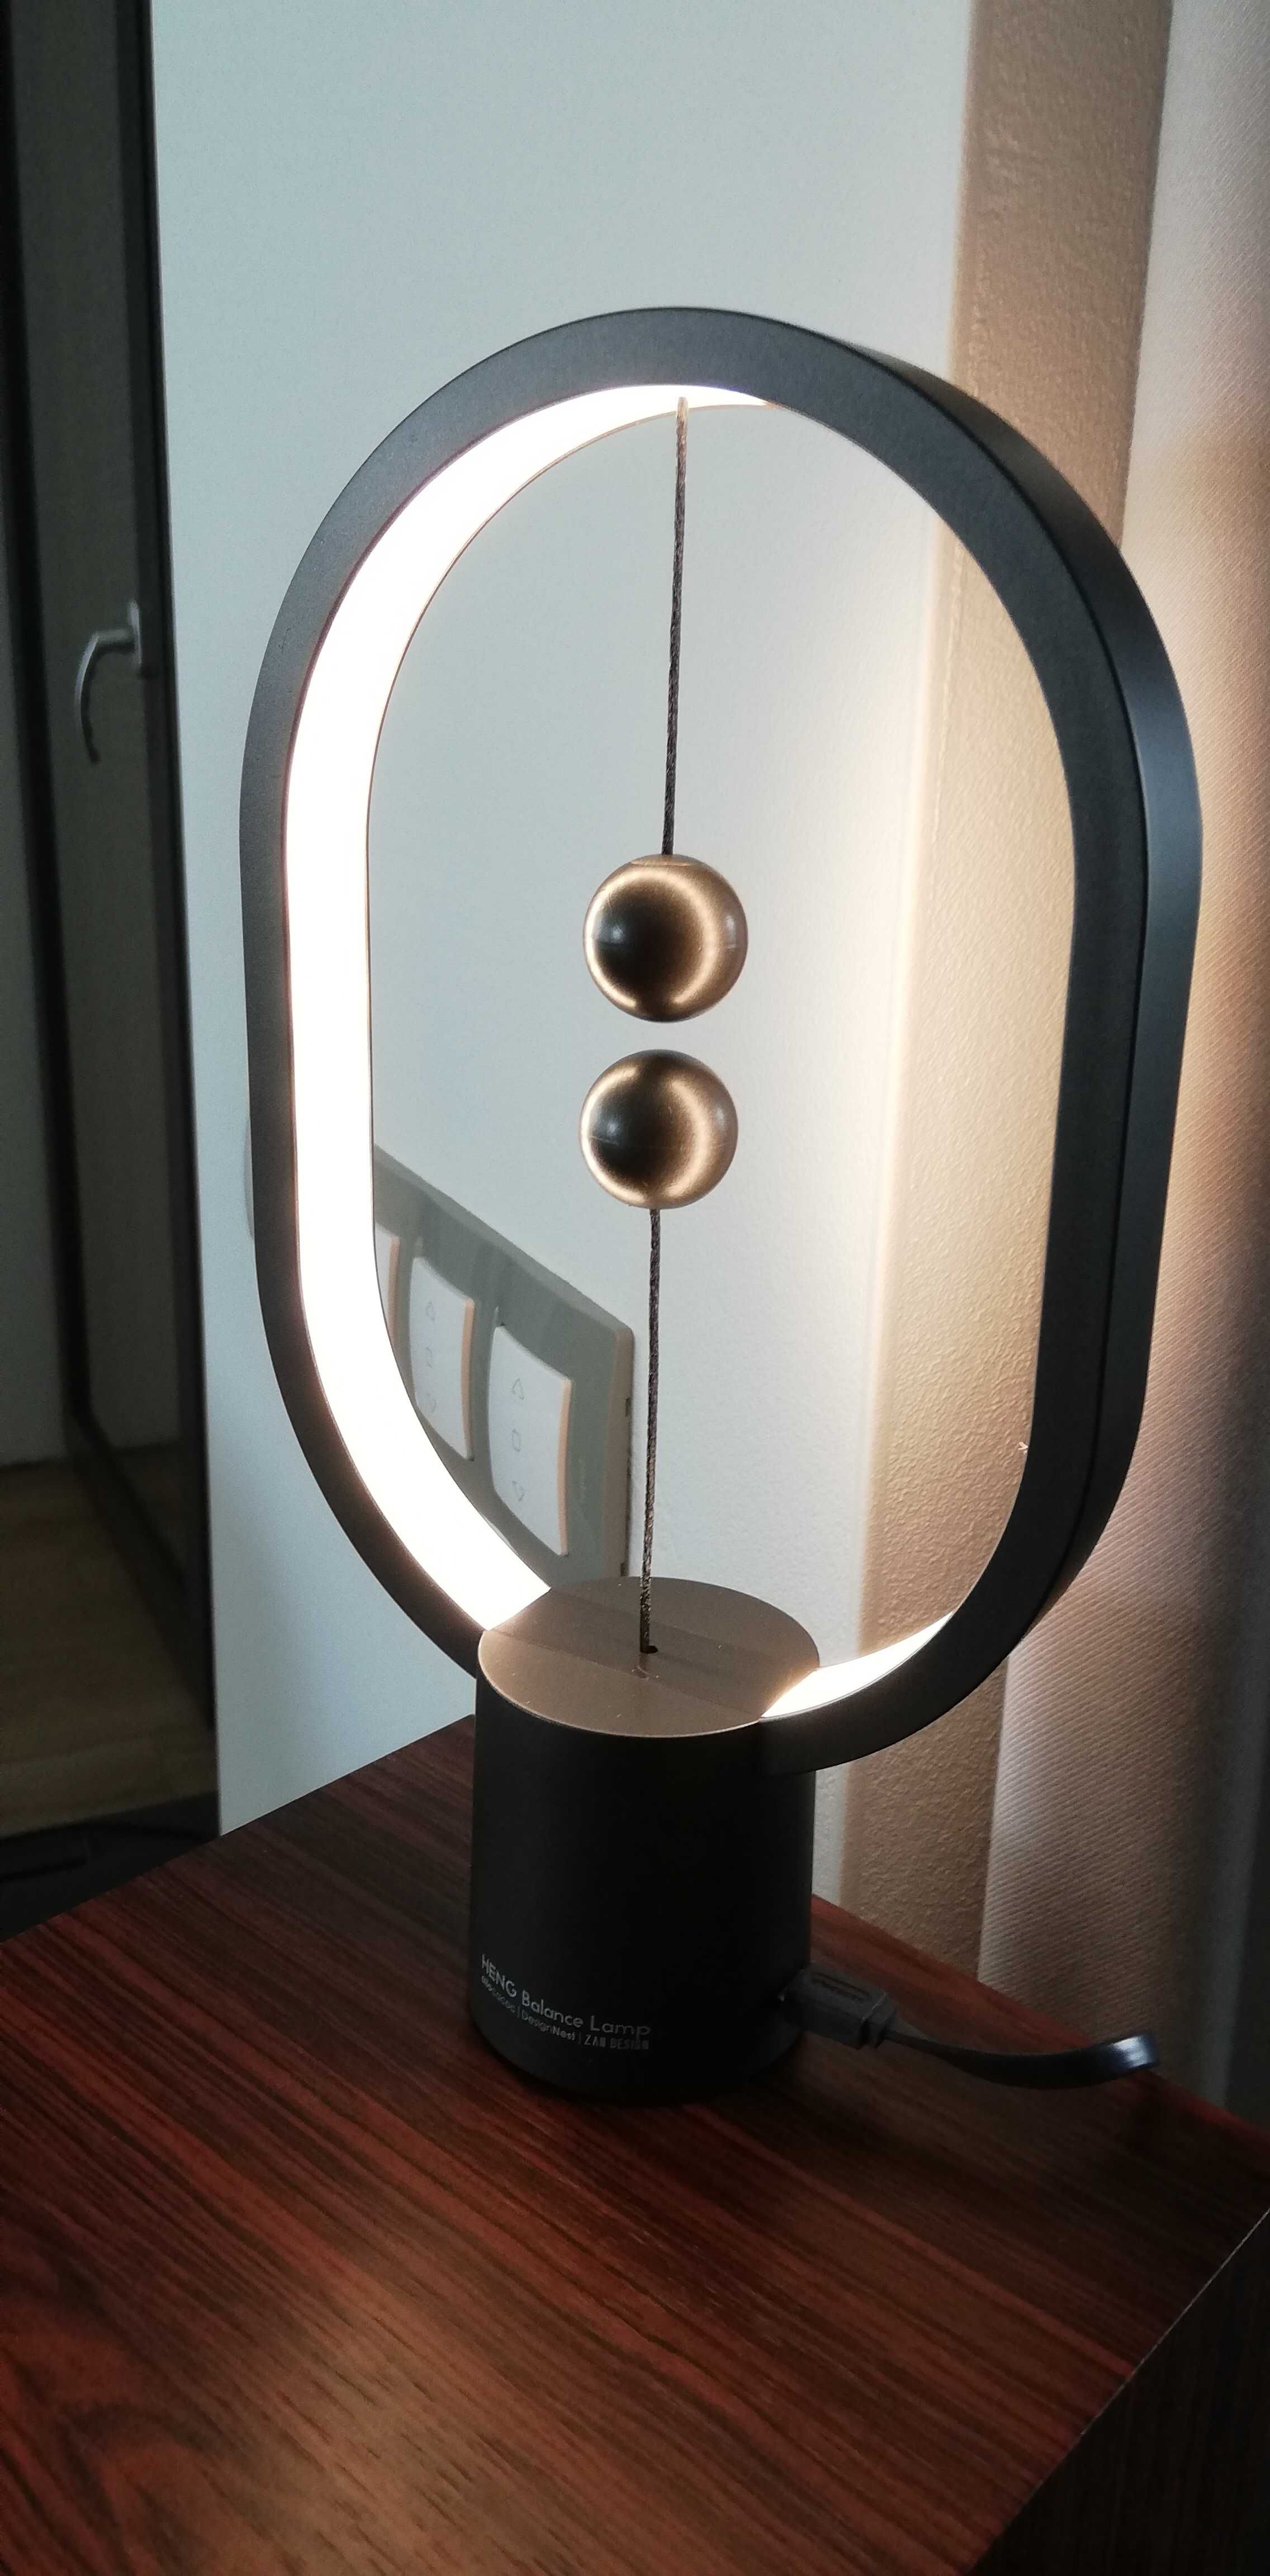 Lampka nocna Heng Balance LED Lamp mini grafitowa 3W